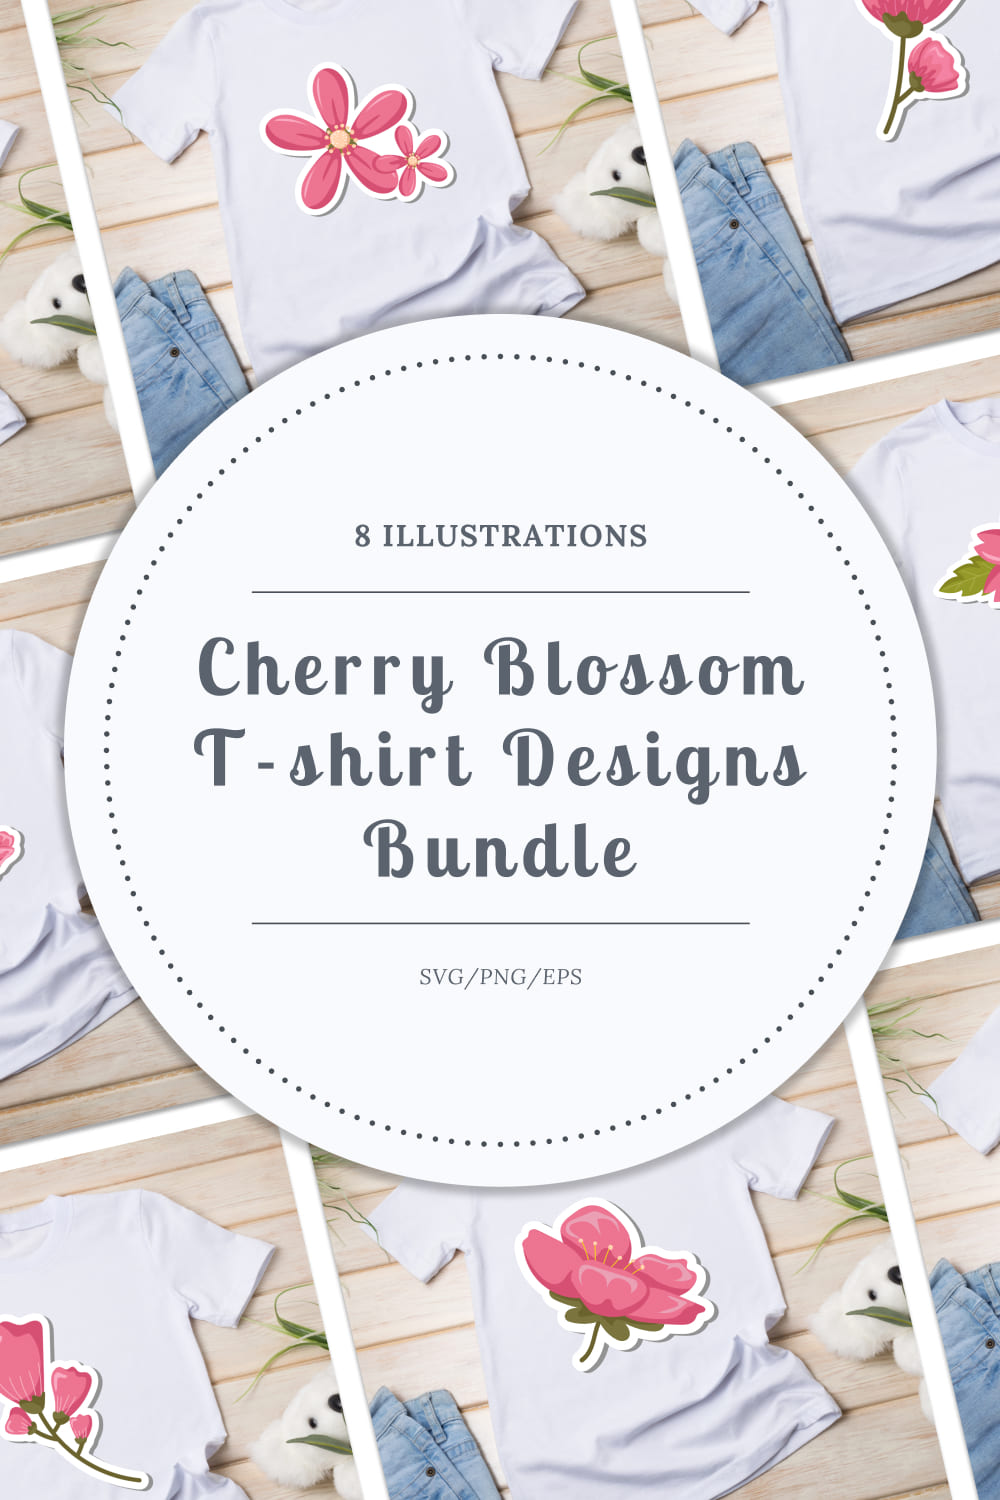 Cherry blossom t shirt designs. images of pinterest.